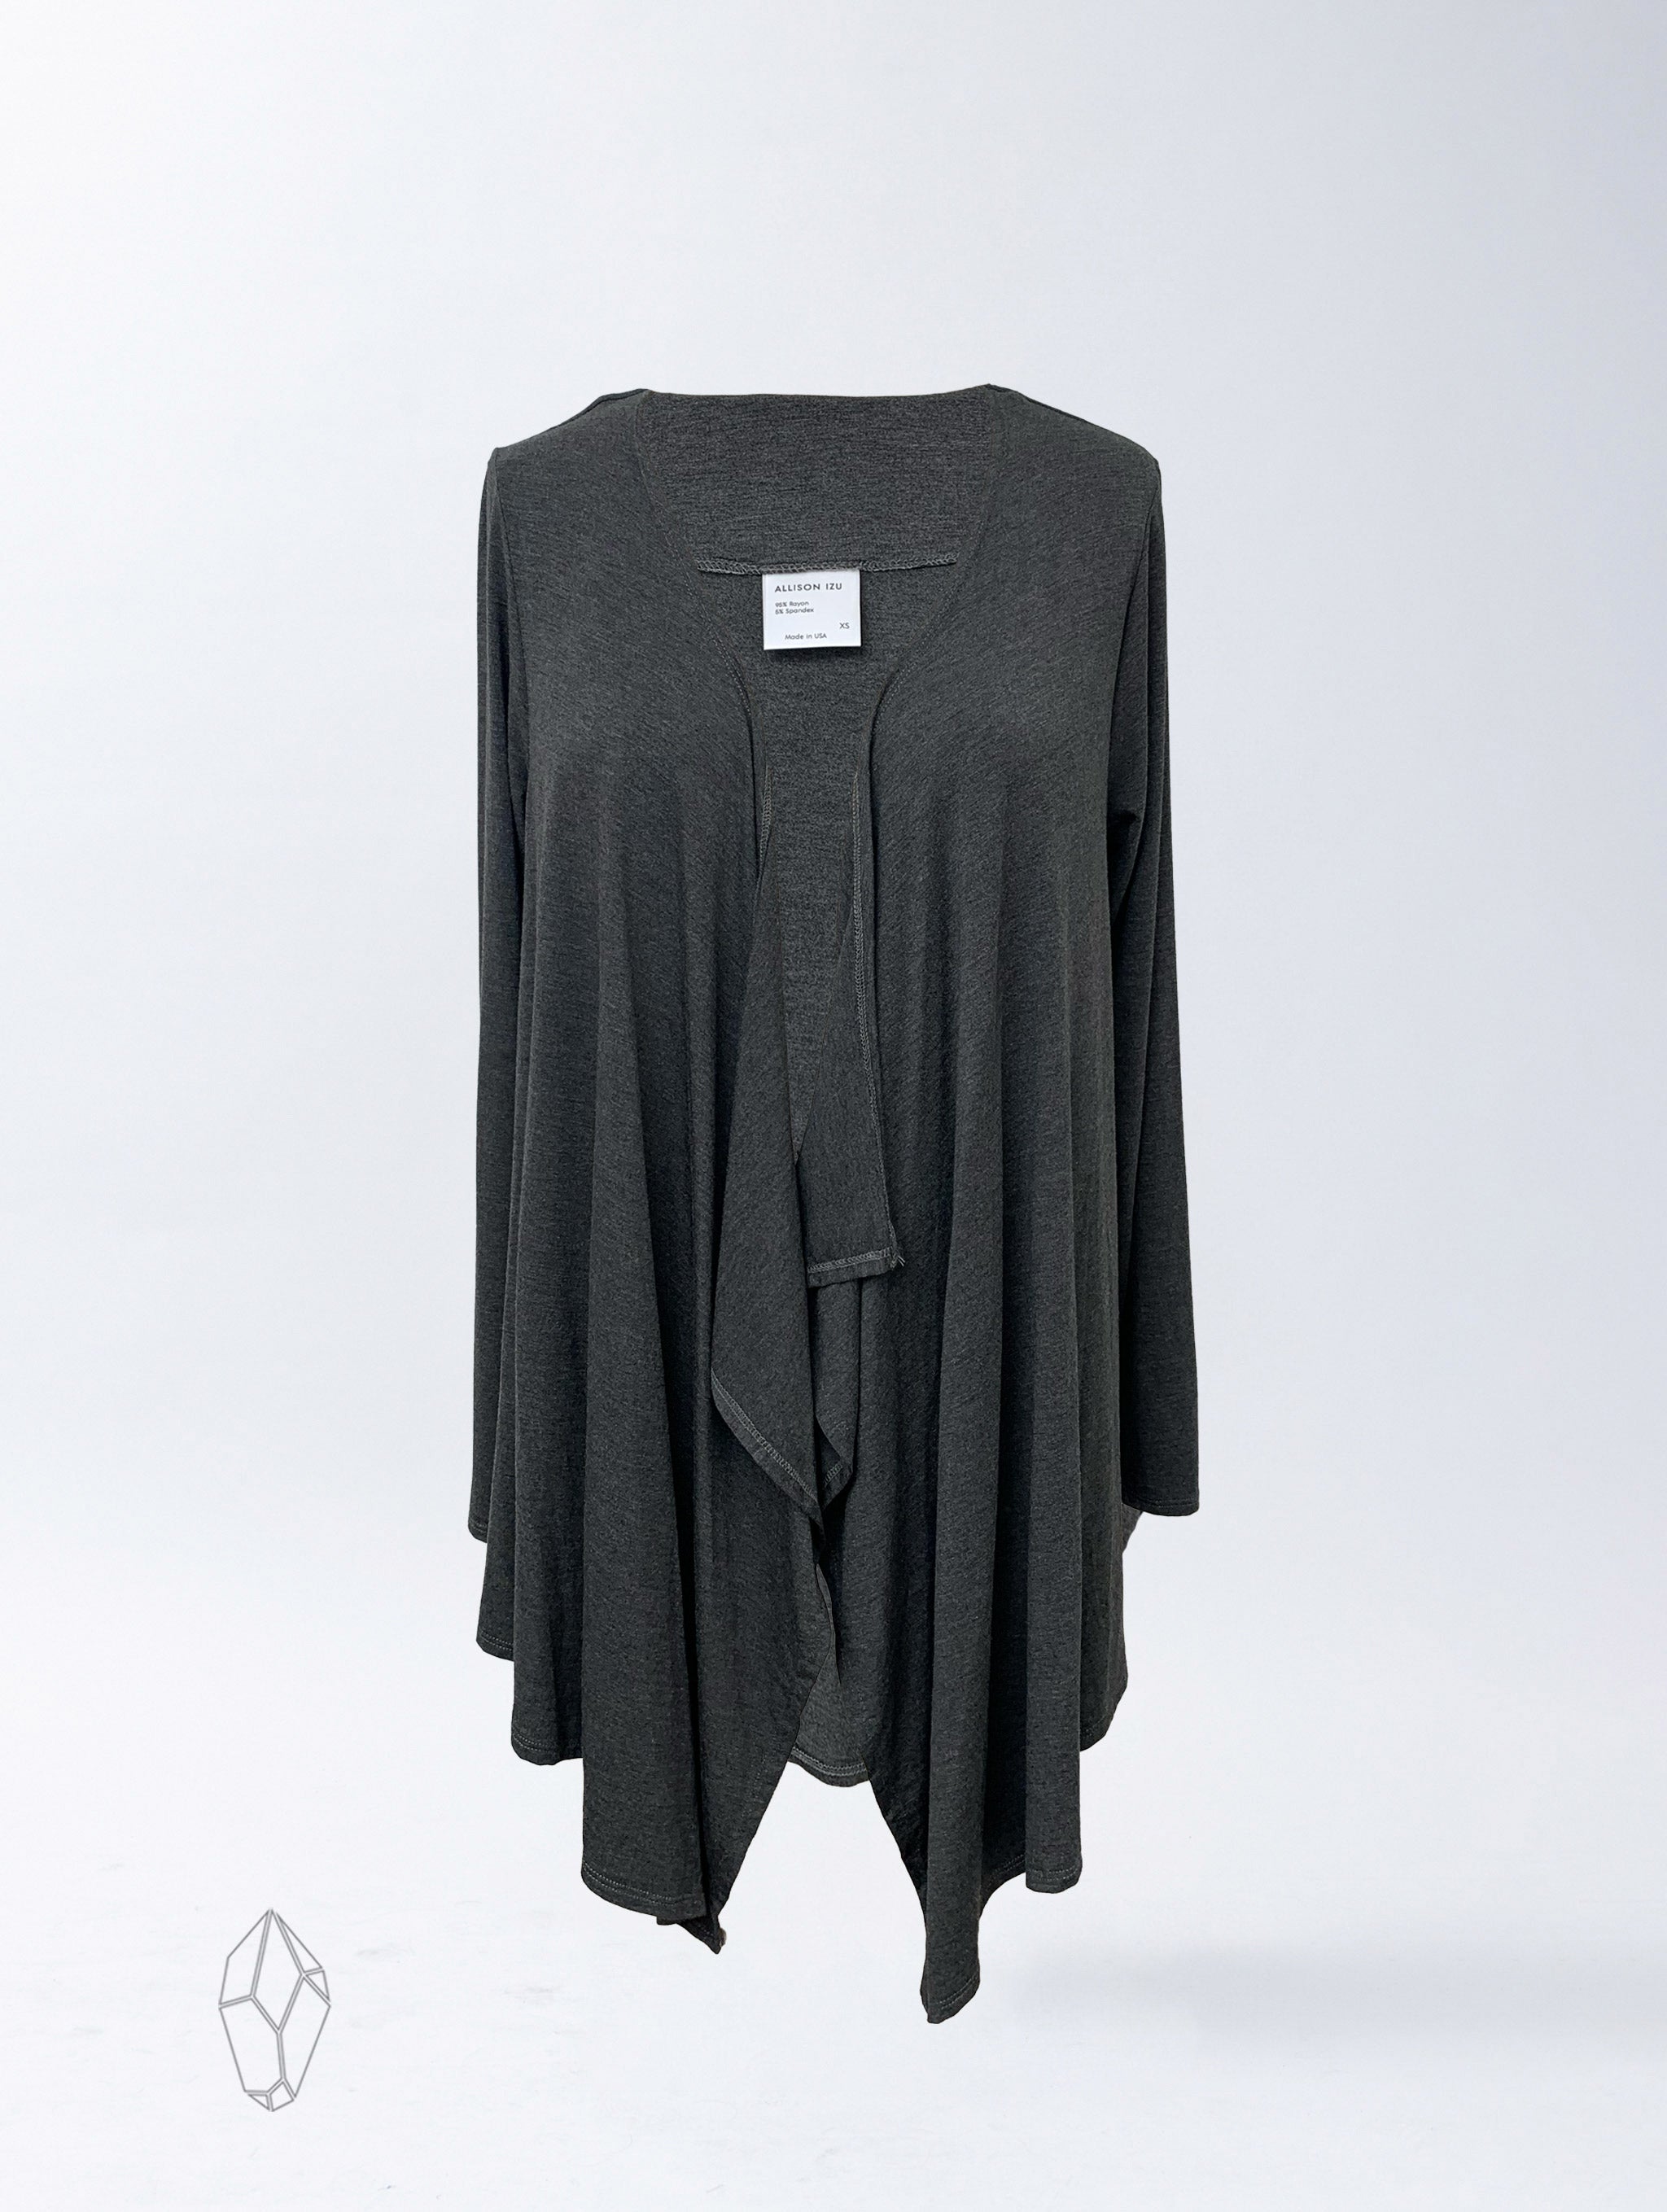 Amari Convertible Cover Up - Dark Charcoal Rayon Jersey